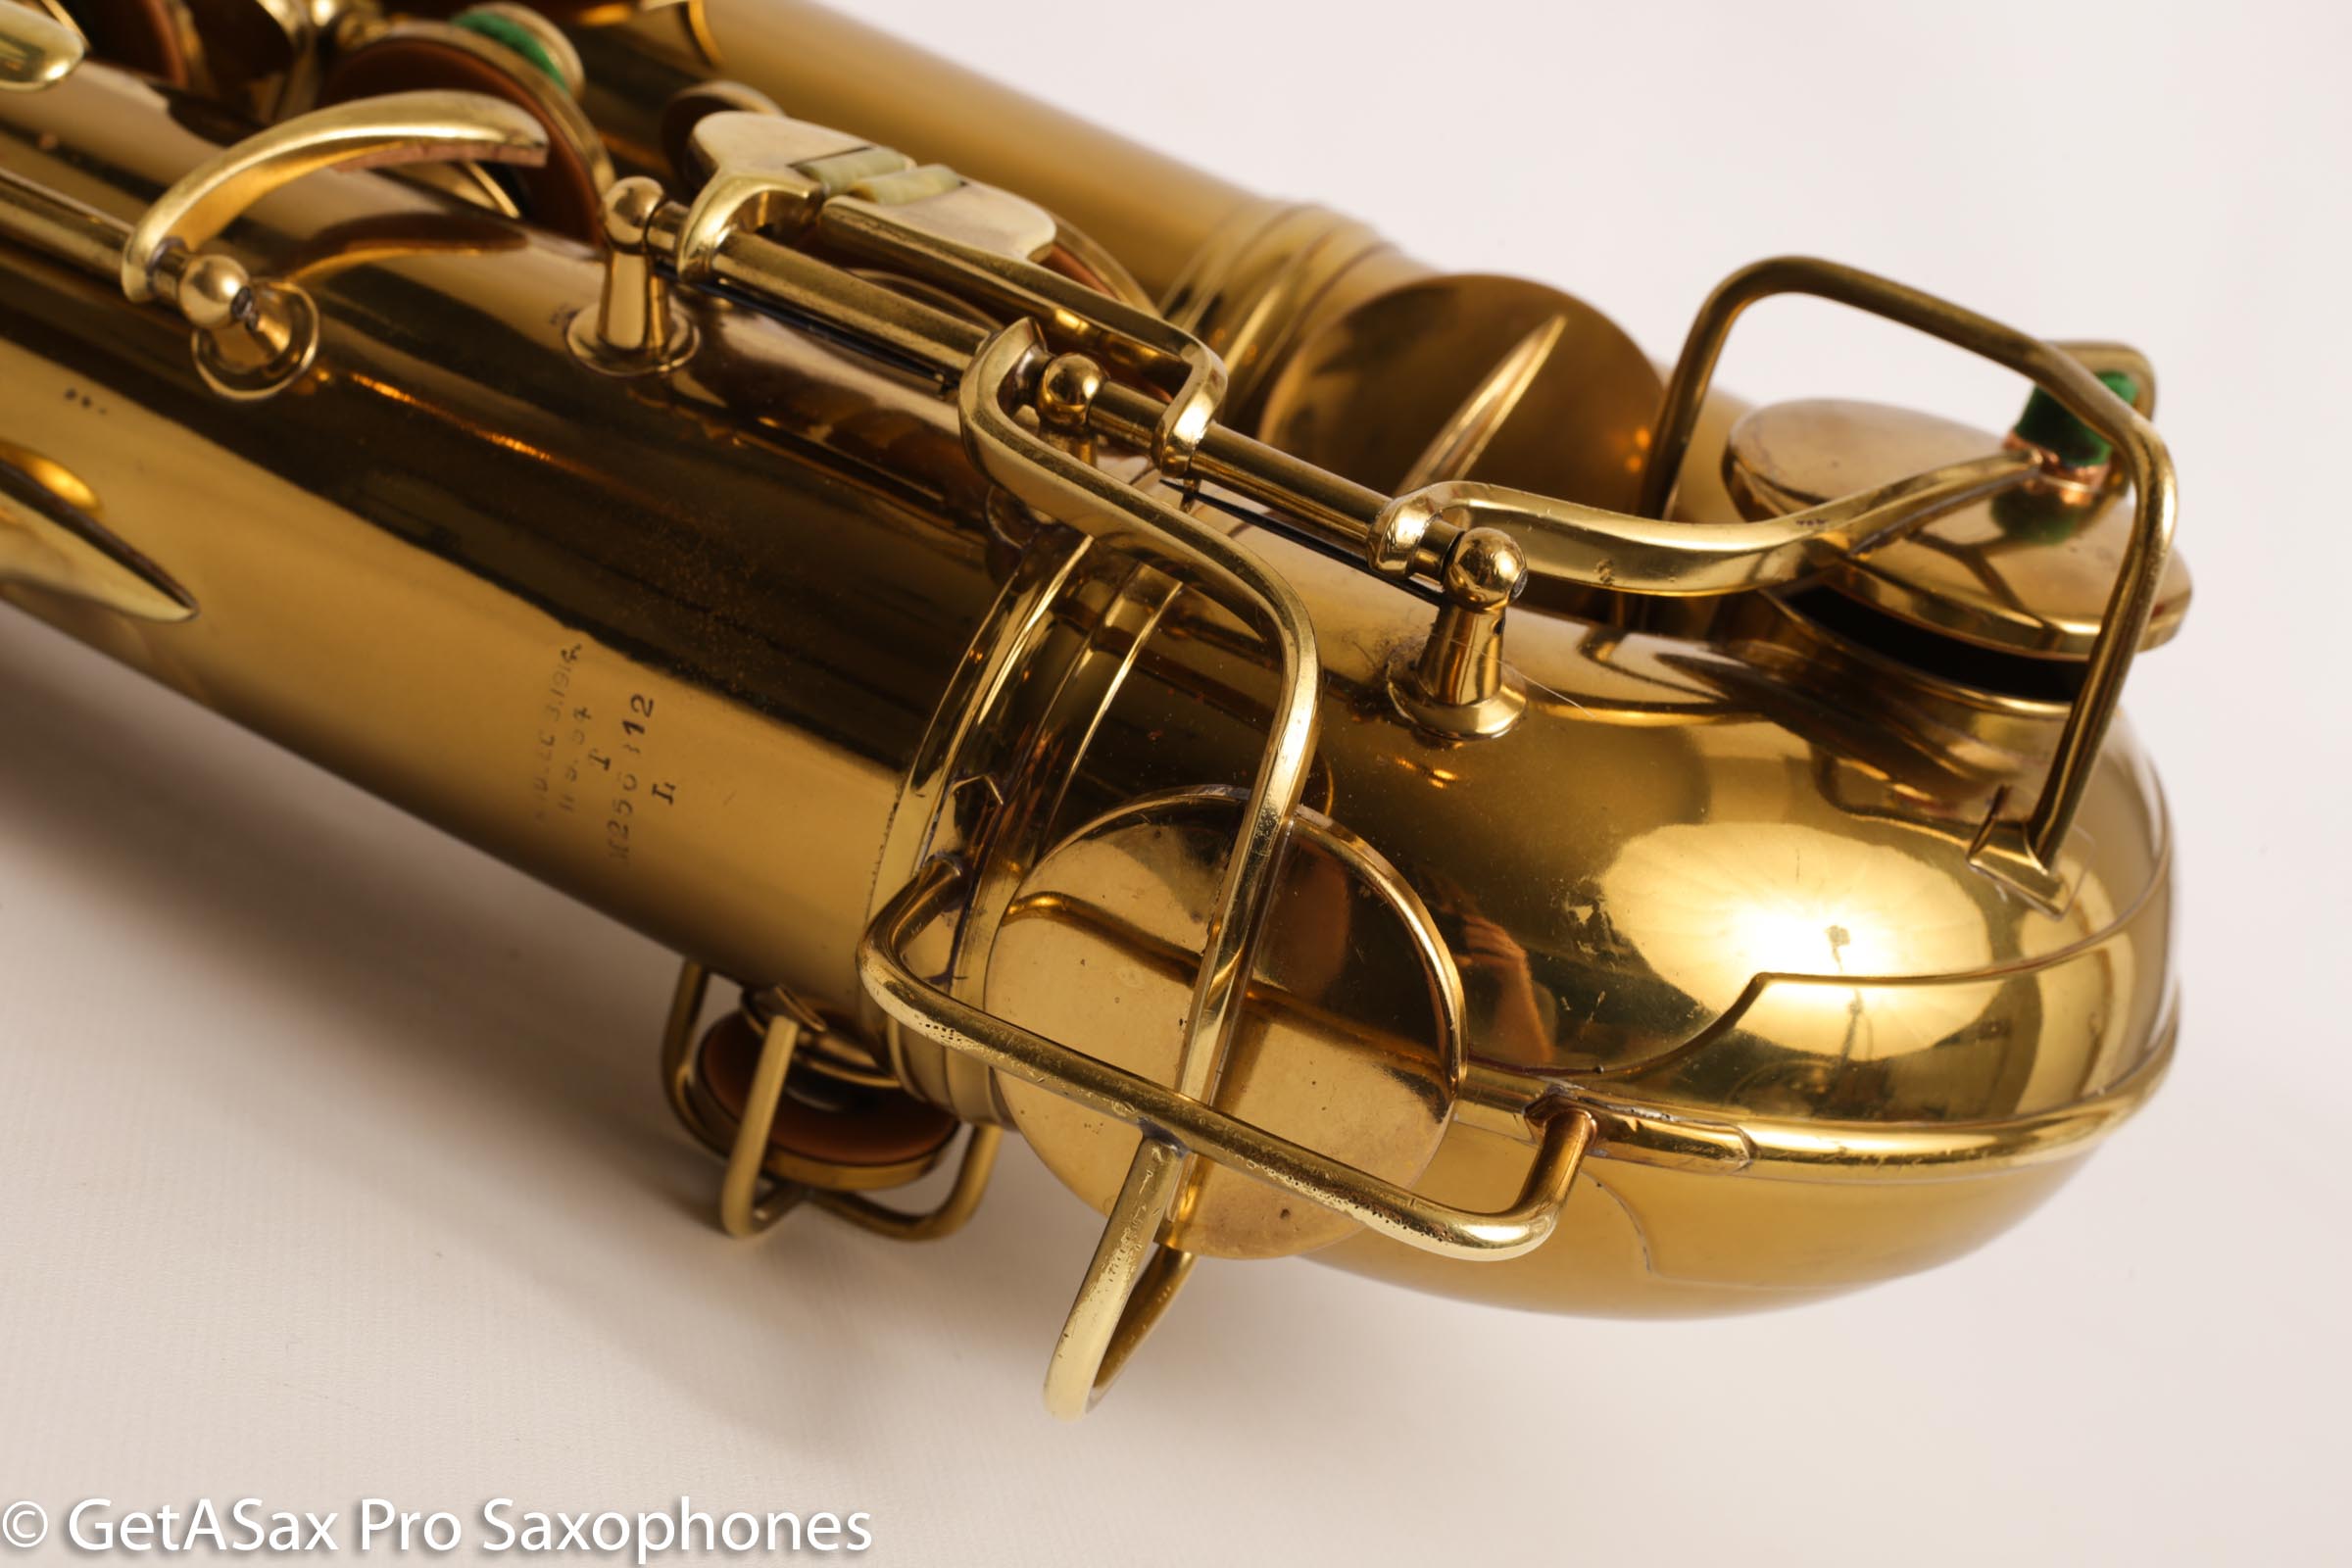 $250 Saxophone vs $3,100 Saxophone 